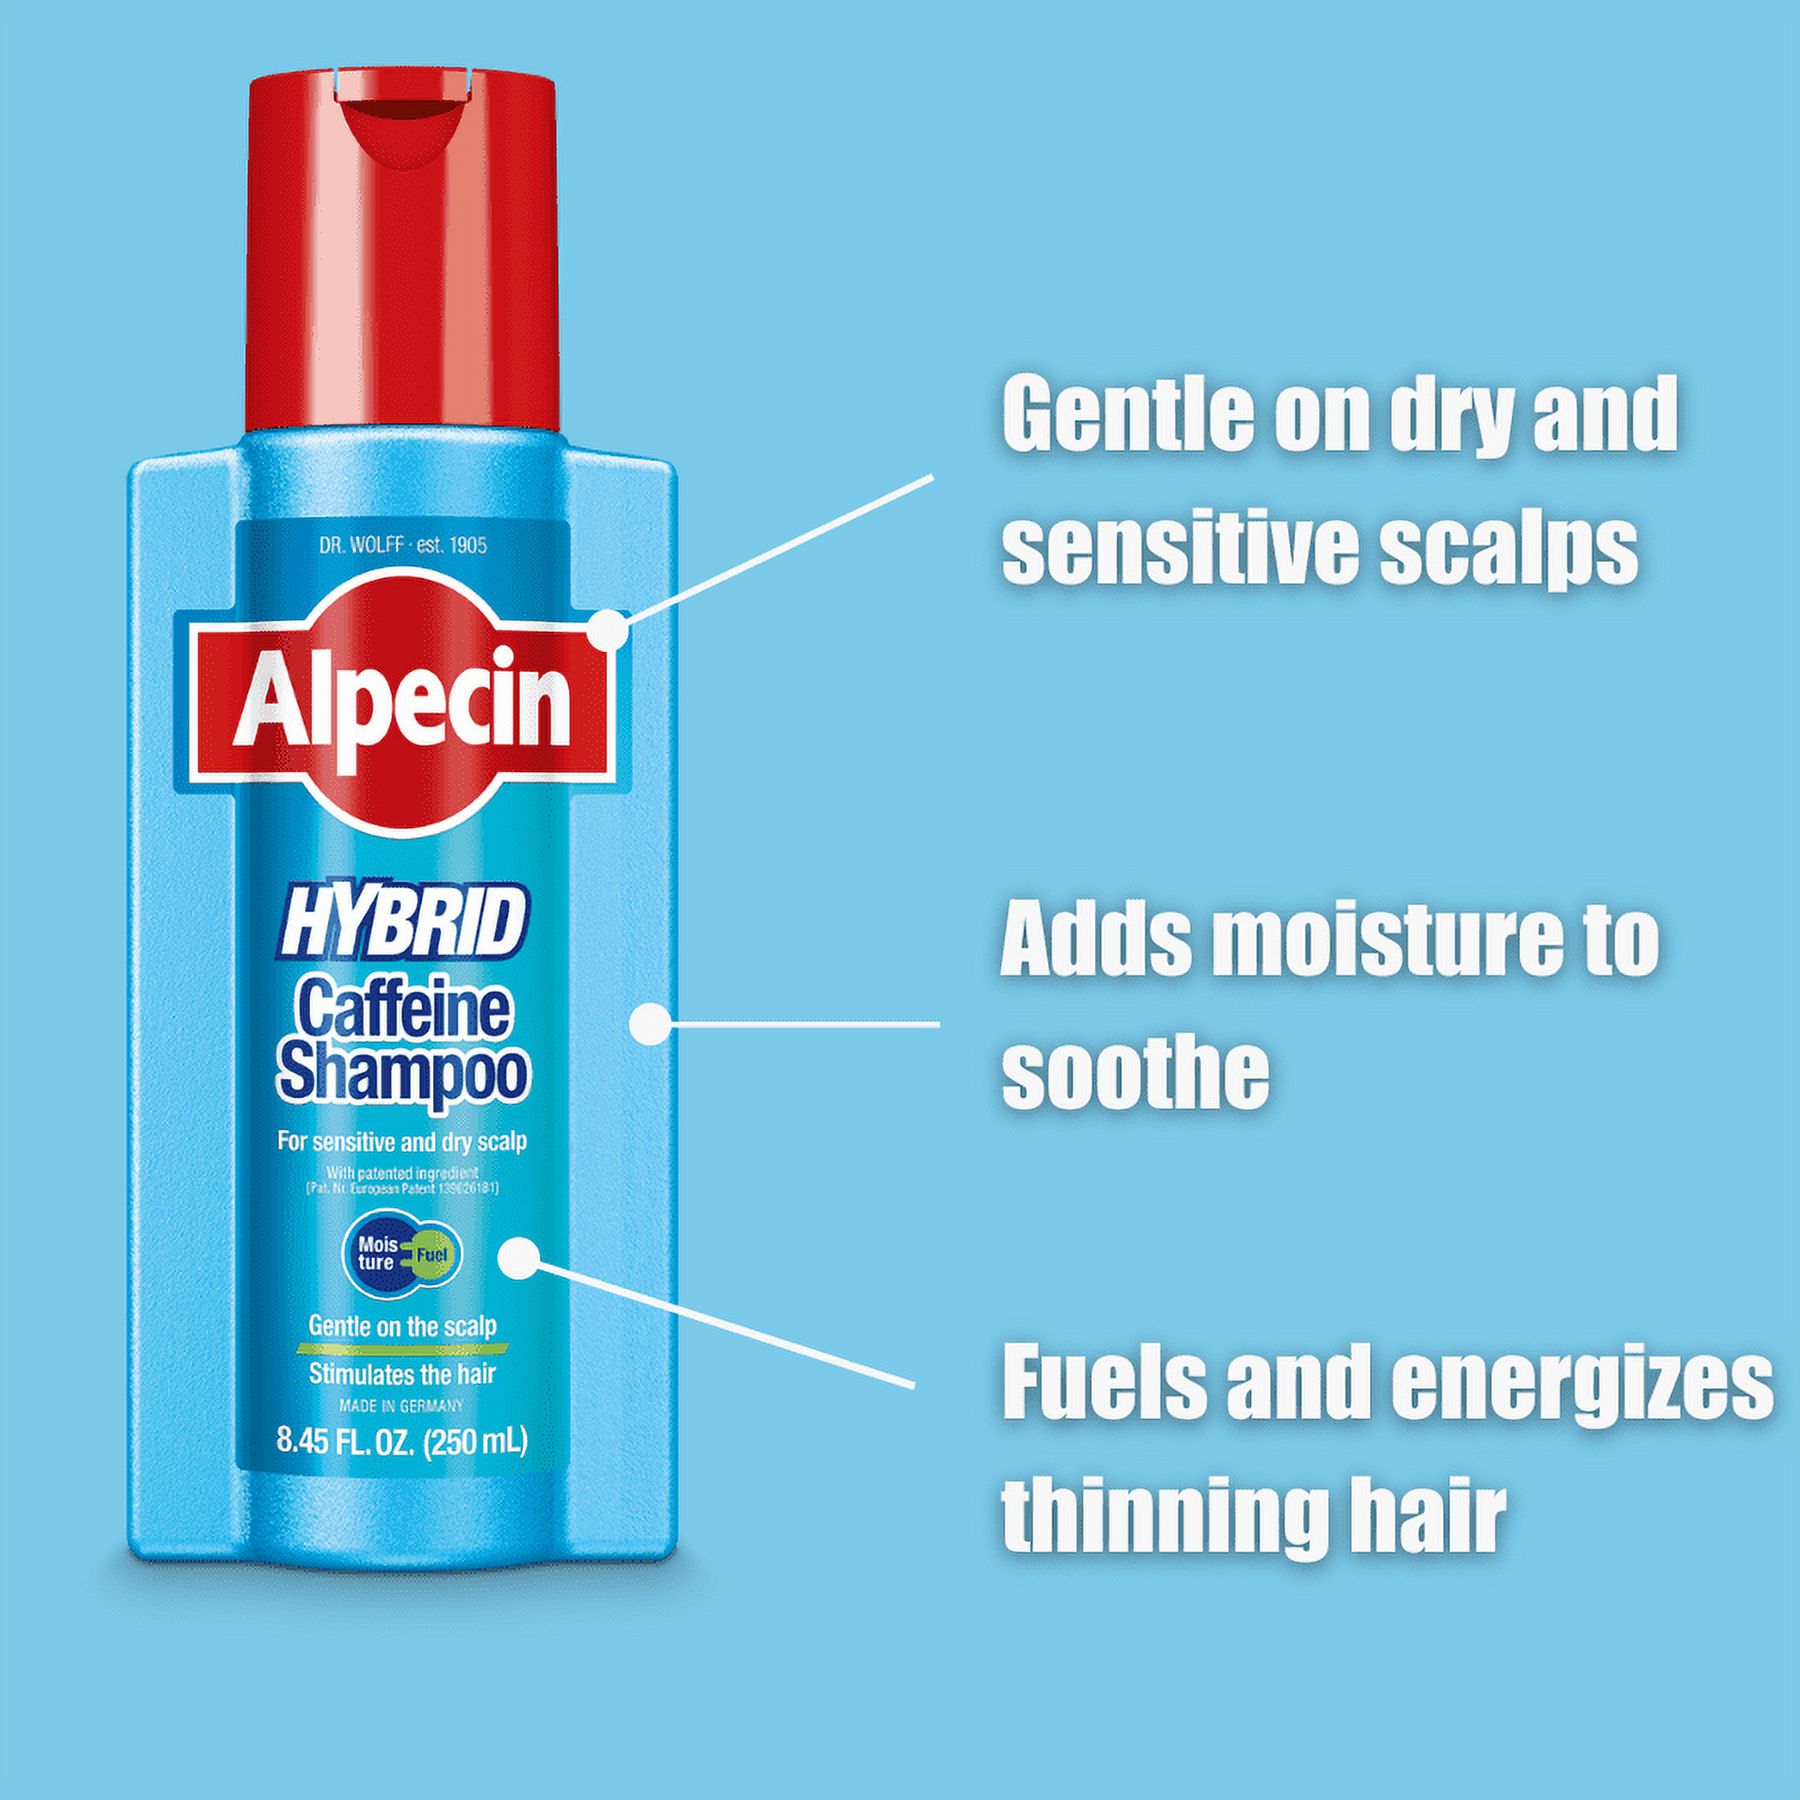 Alpecin Hybrid Caffeine Shampoo for Men with Dry, Itchy, Sensitive Scalps Moisturizes Thinning Hair Natural Hair Growth, 8.45 fl. oz. - image 4 of 5